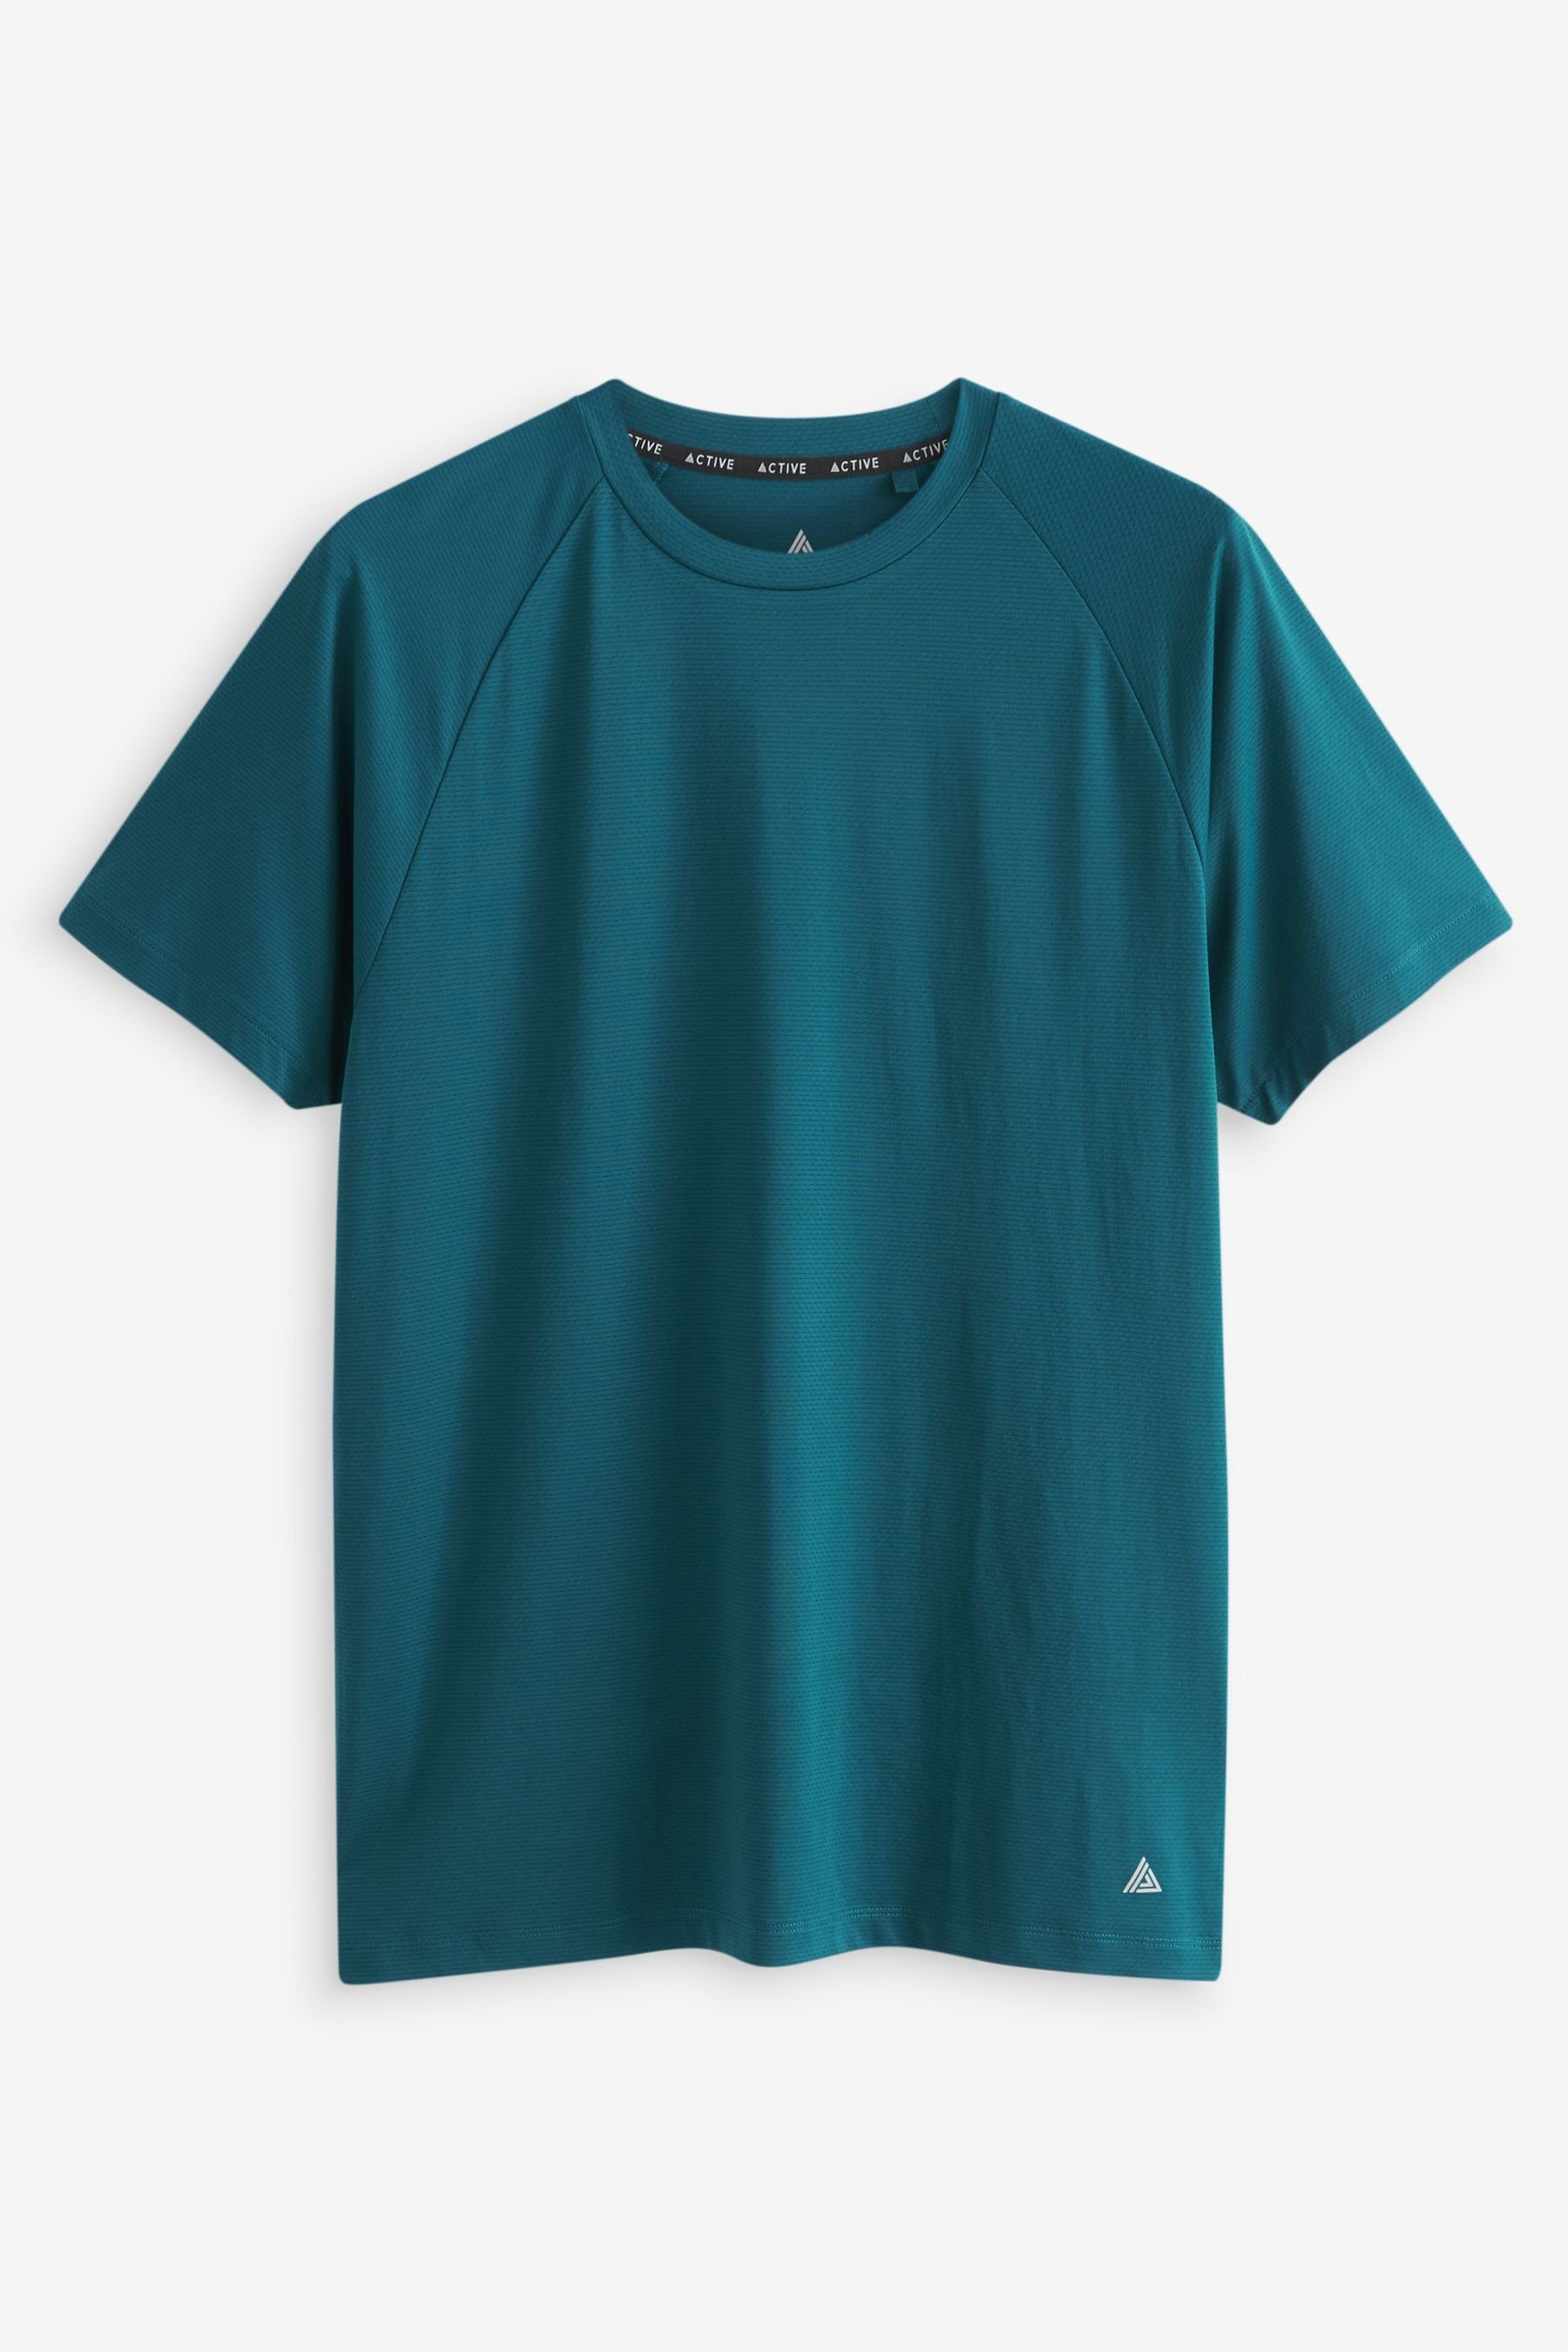 & Teal Next Active Next Strukturiertes (1-tlg) Trainingsshirt T-Shirt Sports Blue